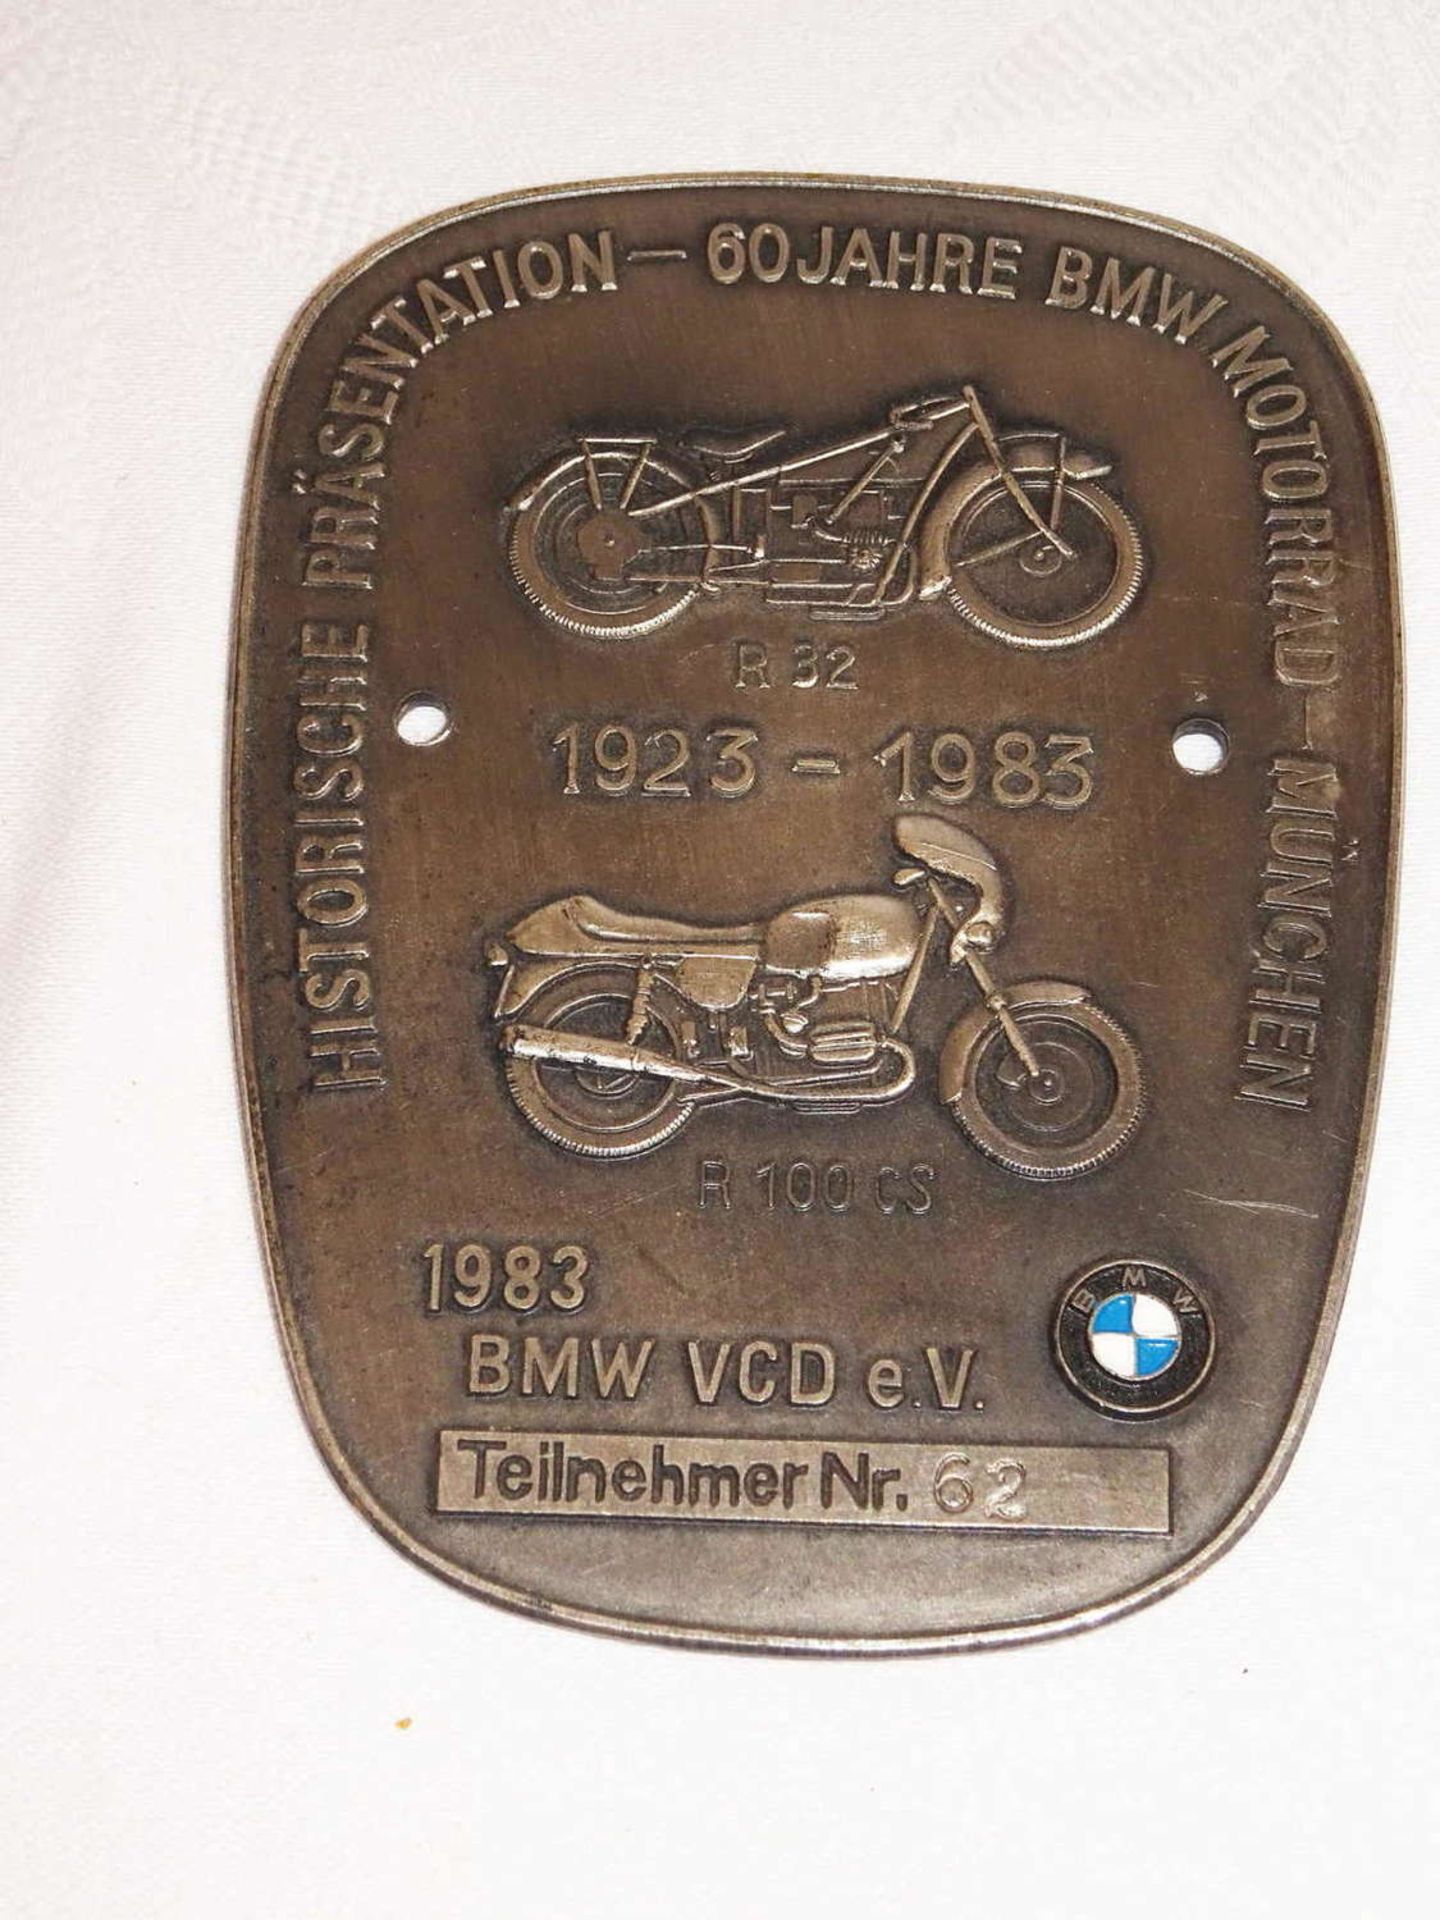 Plaque historical presentation - 60 years BMW Motorrad - Munich 1923-1983, BMW VCD e.V.